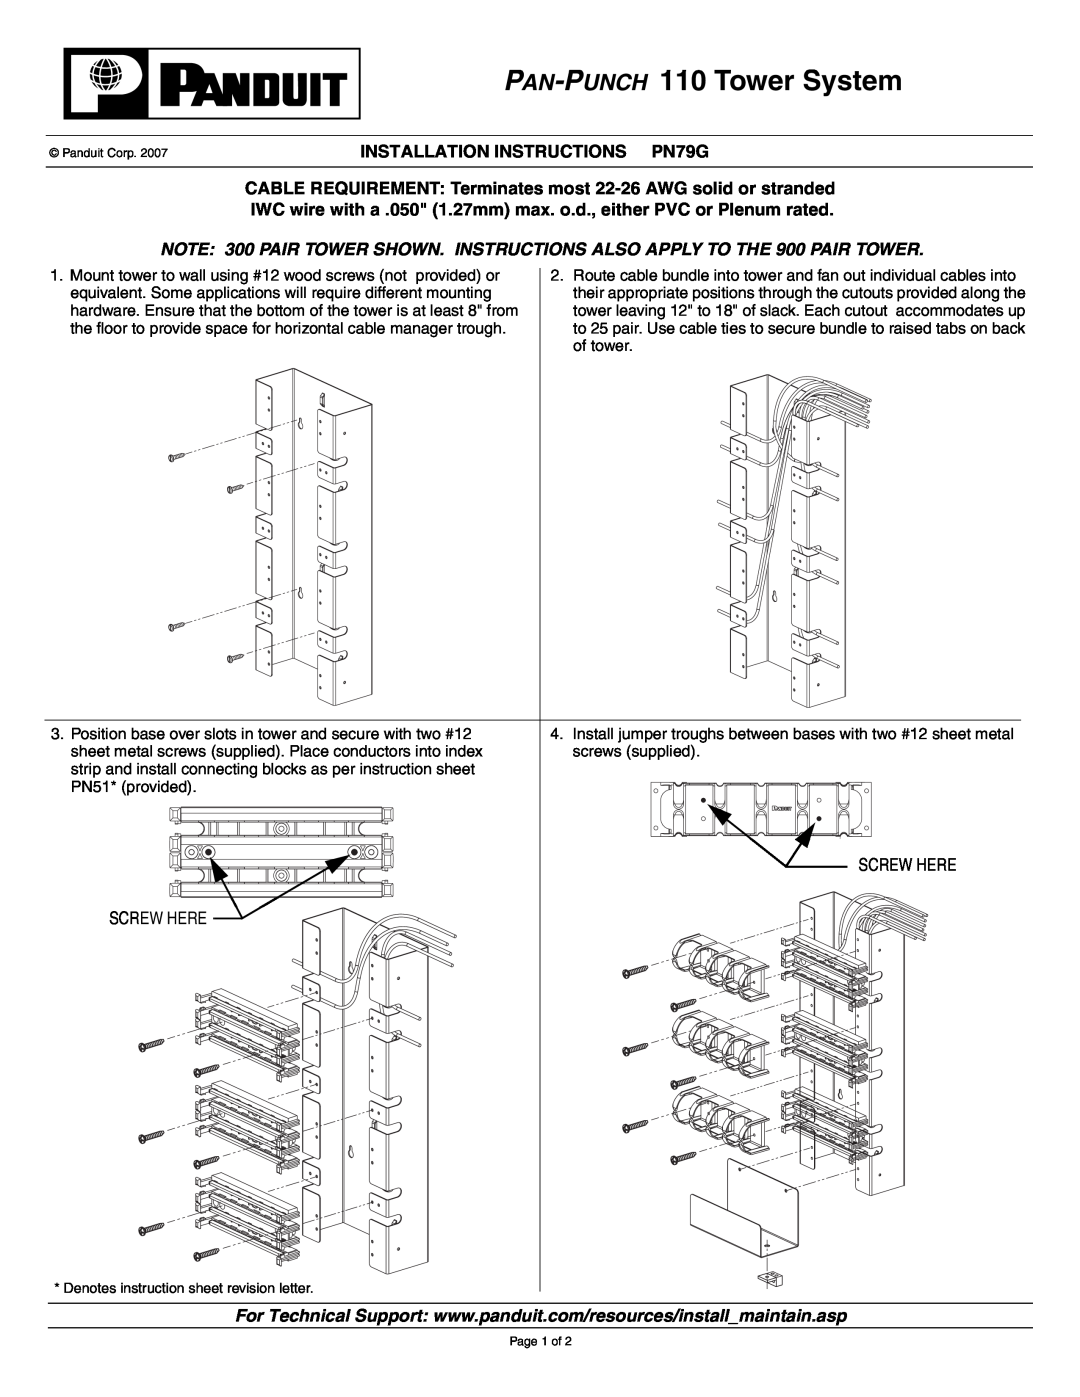 Panduit installation instructions INSTALLATION INSTRUCTIONS PN79G, Screw Here Screw Here, PAN-PUNCH 110 Tower System 